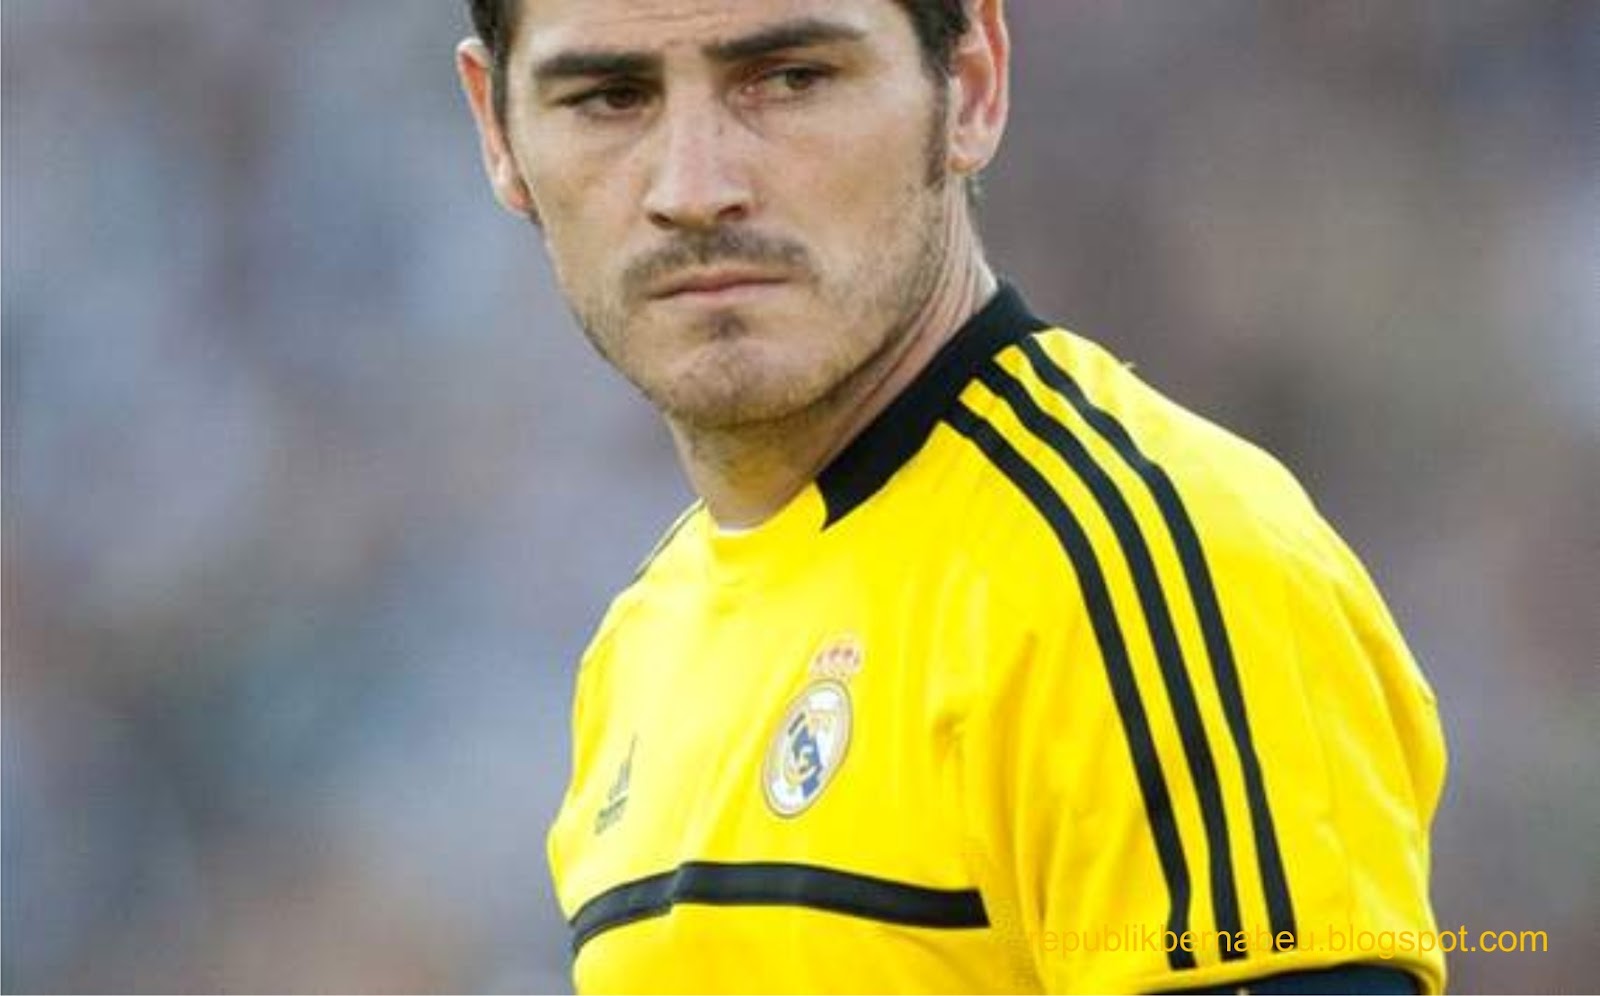 http://4.bp.blogspot.com/-eo25IfbZqP4/T5OA6emrMMI/AAAAAAAABFA/LBzyyNVYlrc/s1600/Iker+Casillas+Cristiano+bermain+luar+biasa,.jpg